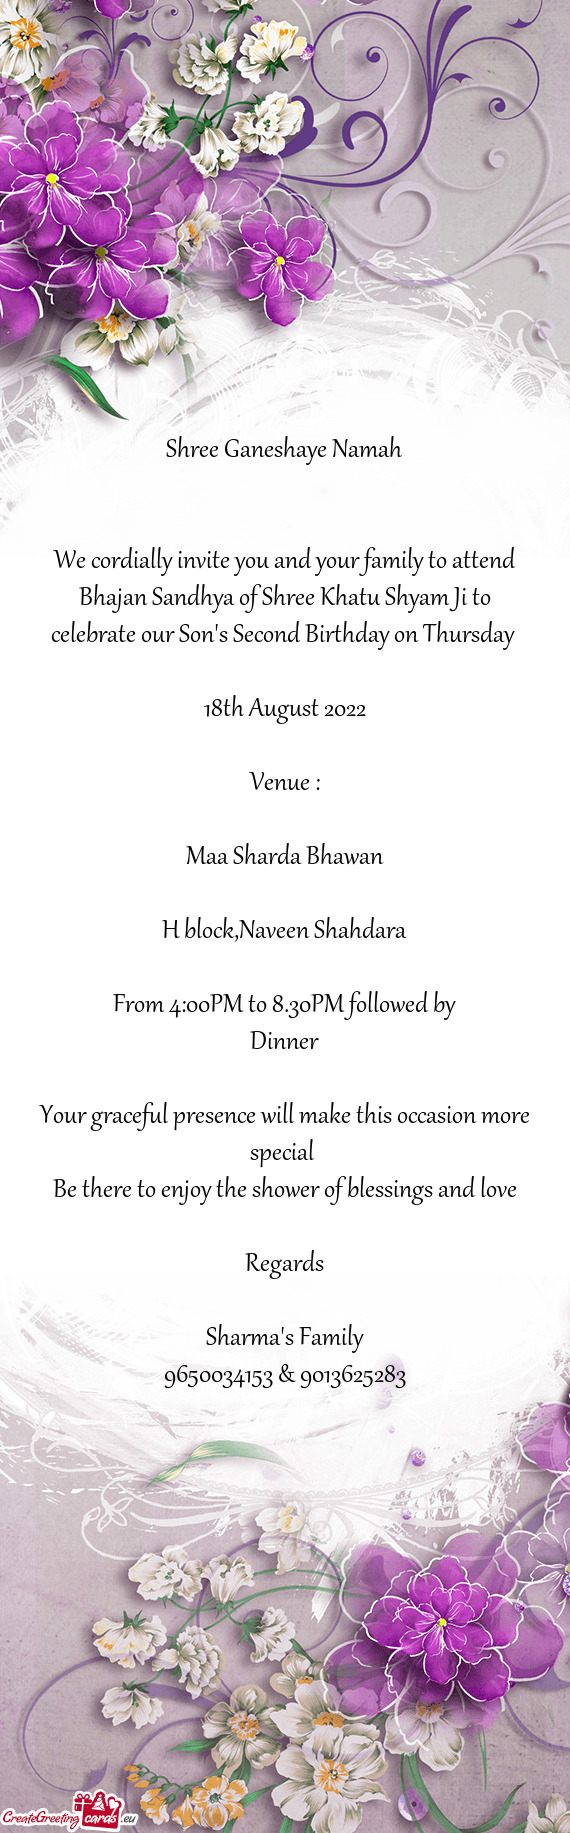 We cordially invite you and your family to attend Bhajan Sandhya of Shree Khatu Shyam Ji to celebrat